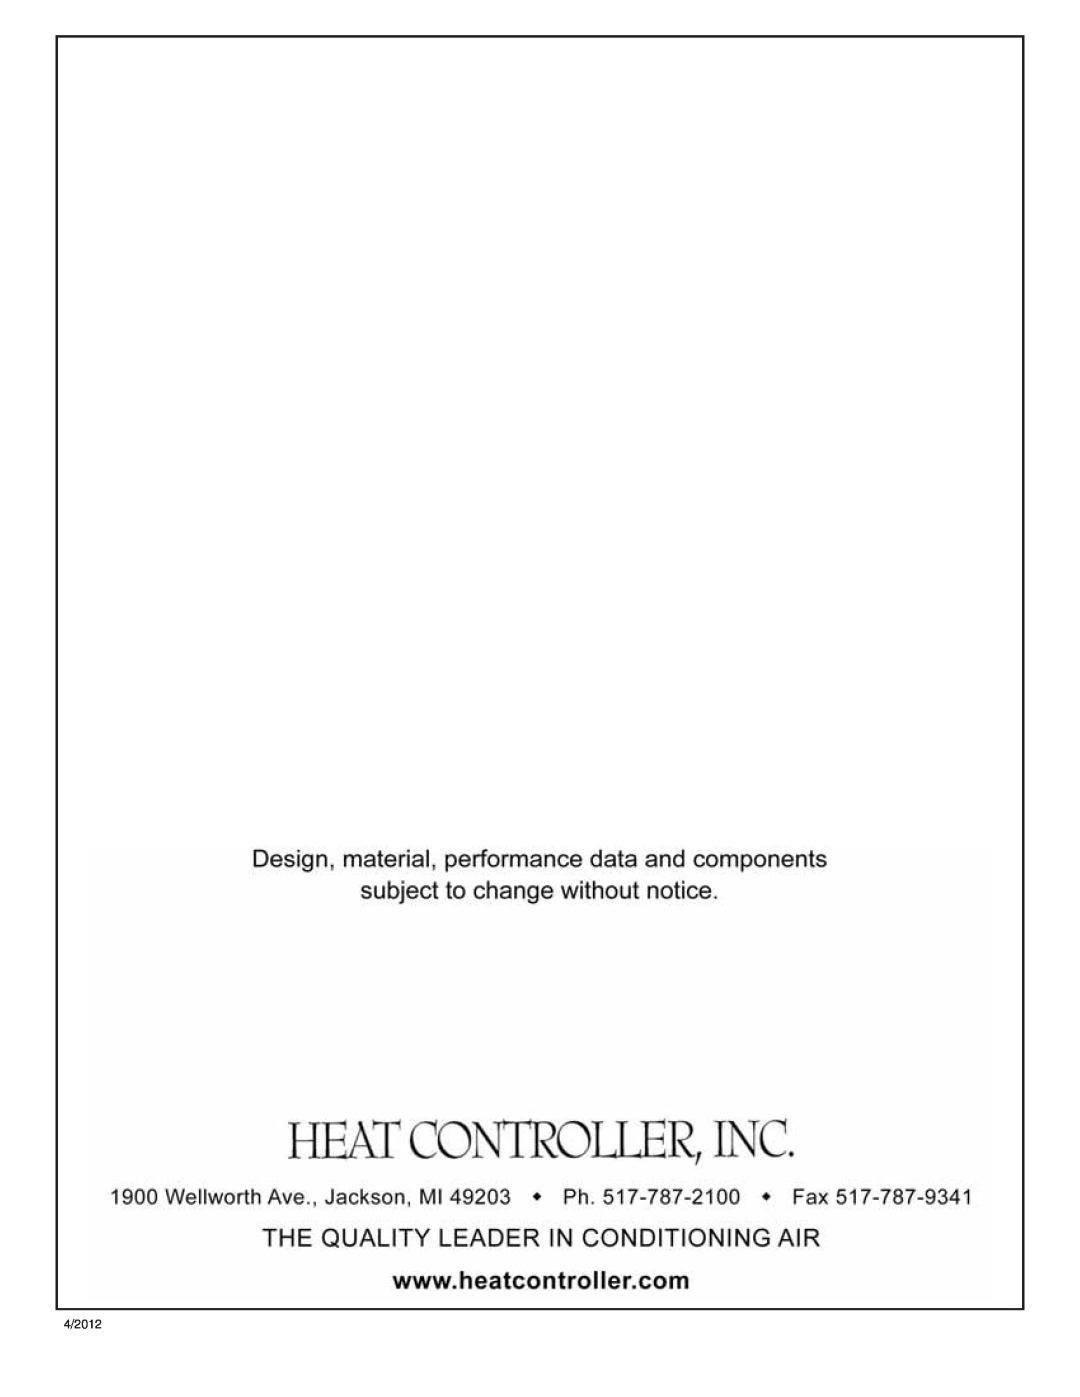 Heat Controller DXM2 manual 4/2012 